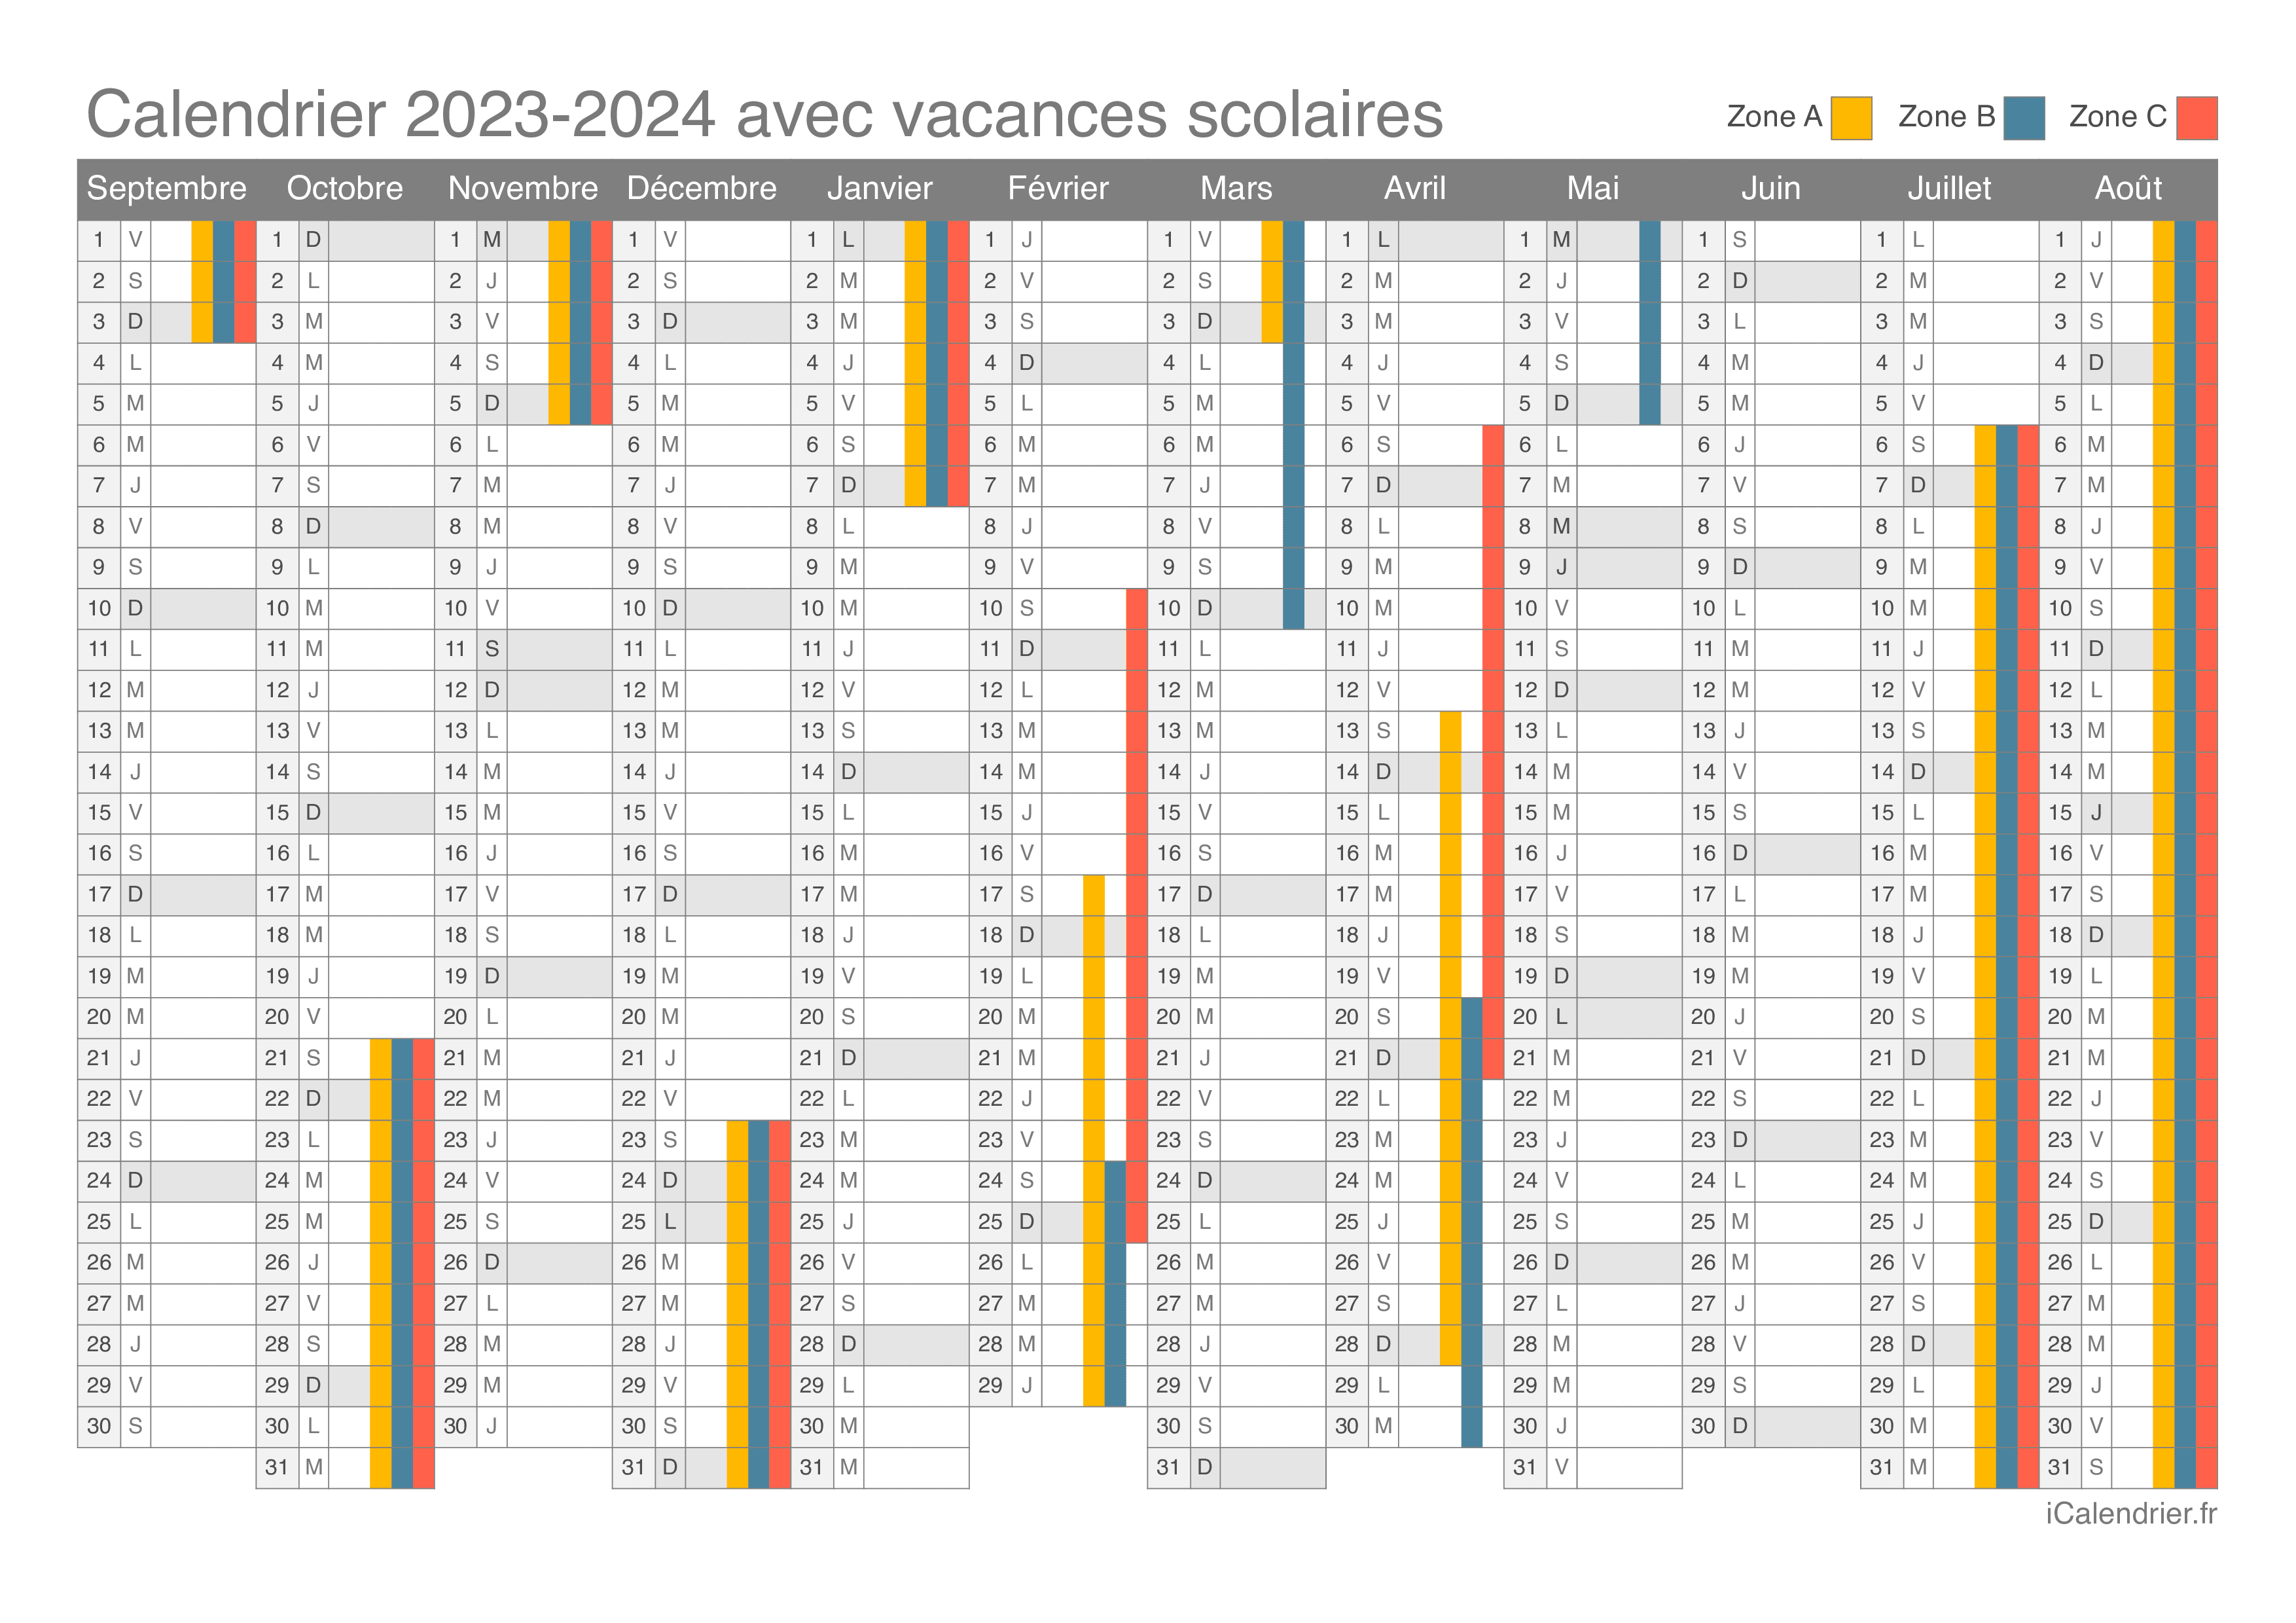 Vacances Scolaires 2023 2024 Dates Et Calendrier Icalendrier | Free